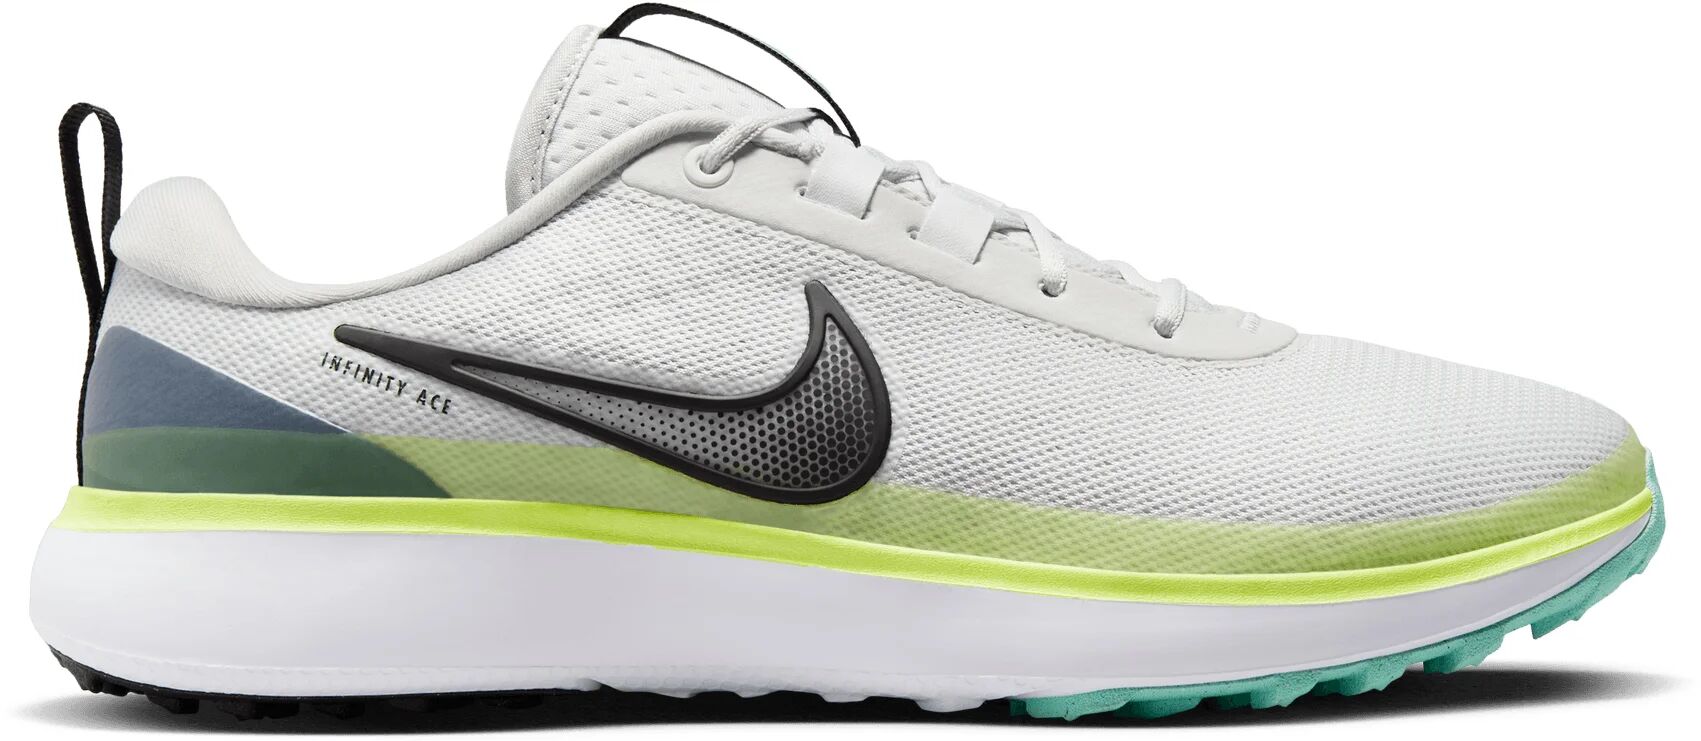 Nike Infinity Ace Next Nature Golf Shoes - Photon Dust/Emerald Rise/Volt/Black - 7.5 - MEDIUM